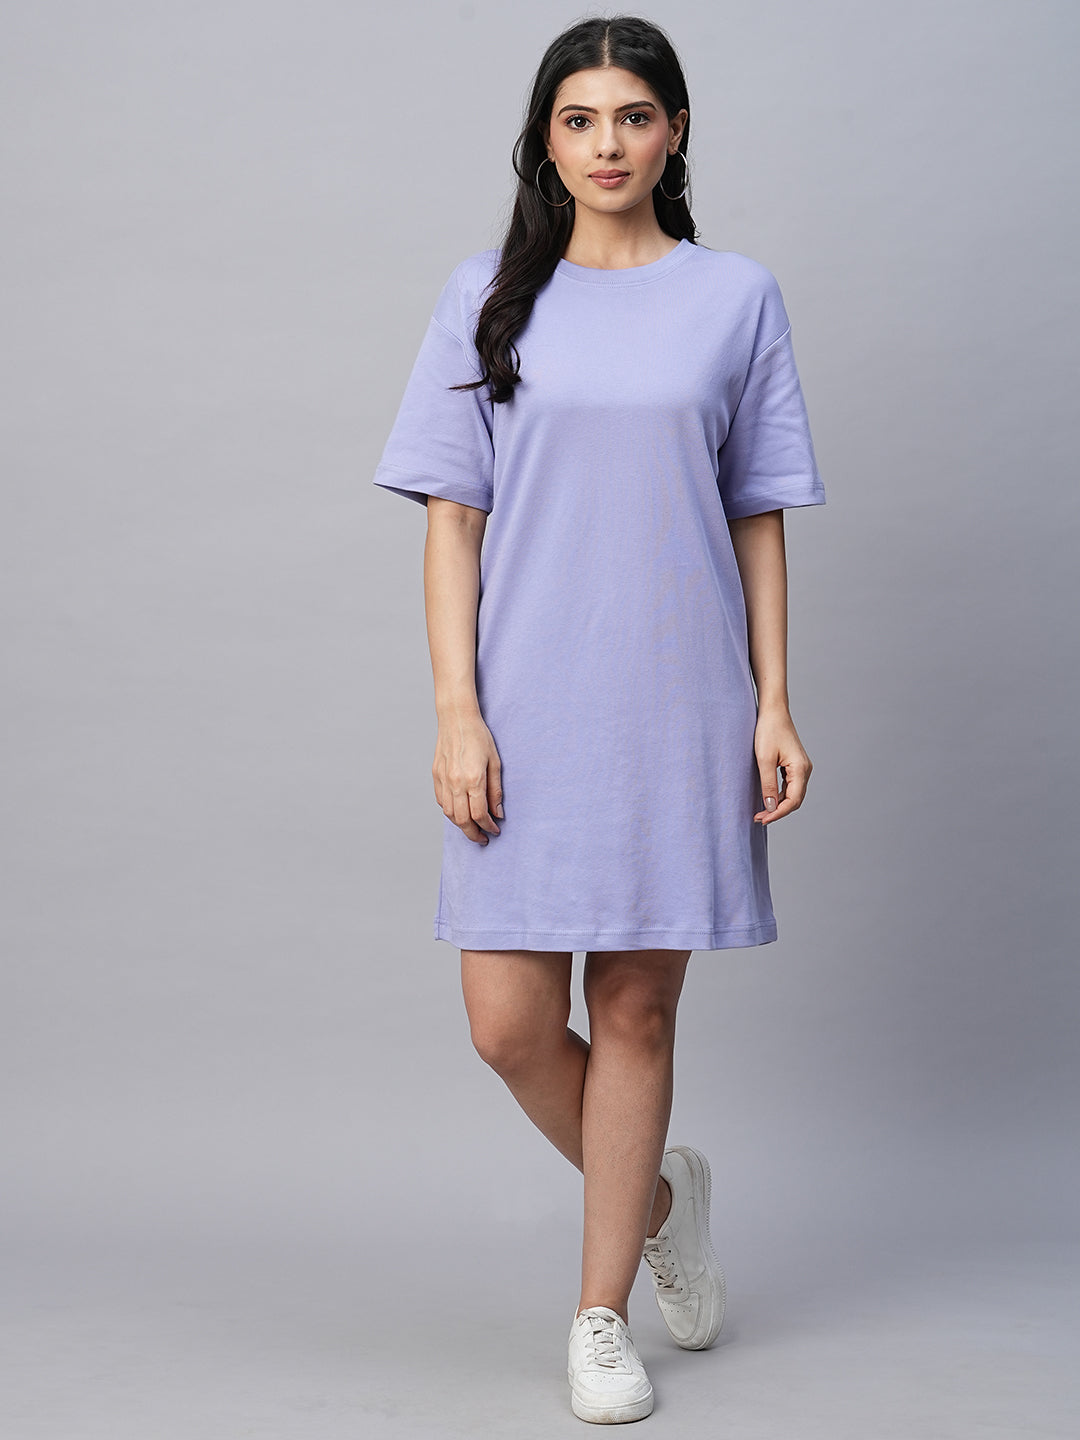 Women's Lavender Cotton Regular Fit Knit Dress